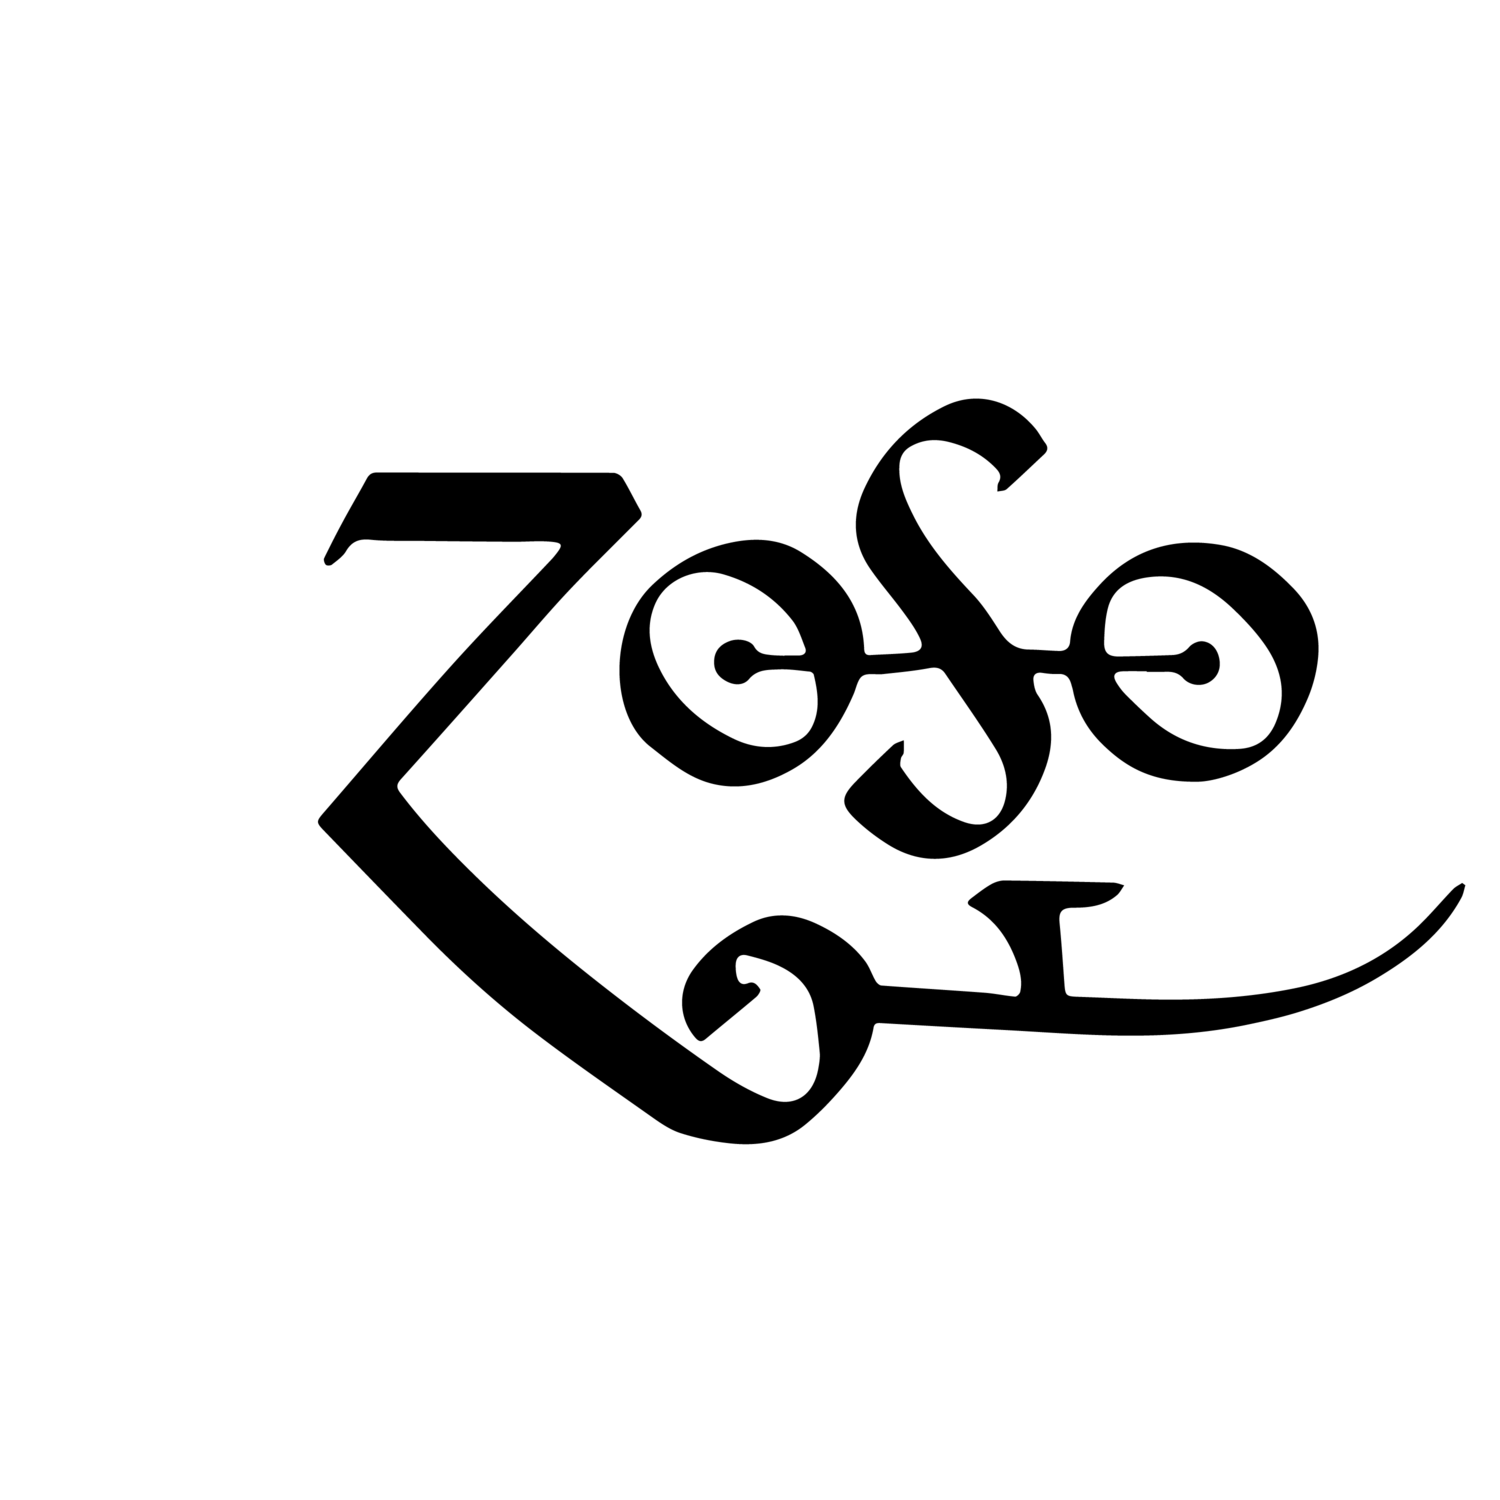 Zoso Logo - Zoso - The Ultimate Led Zeppelin Experience